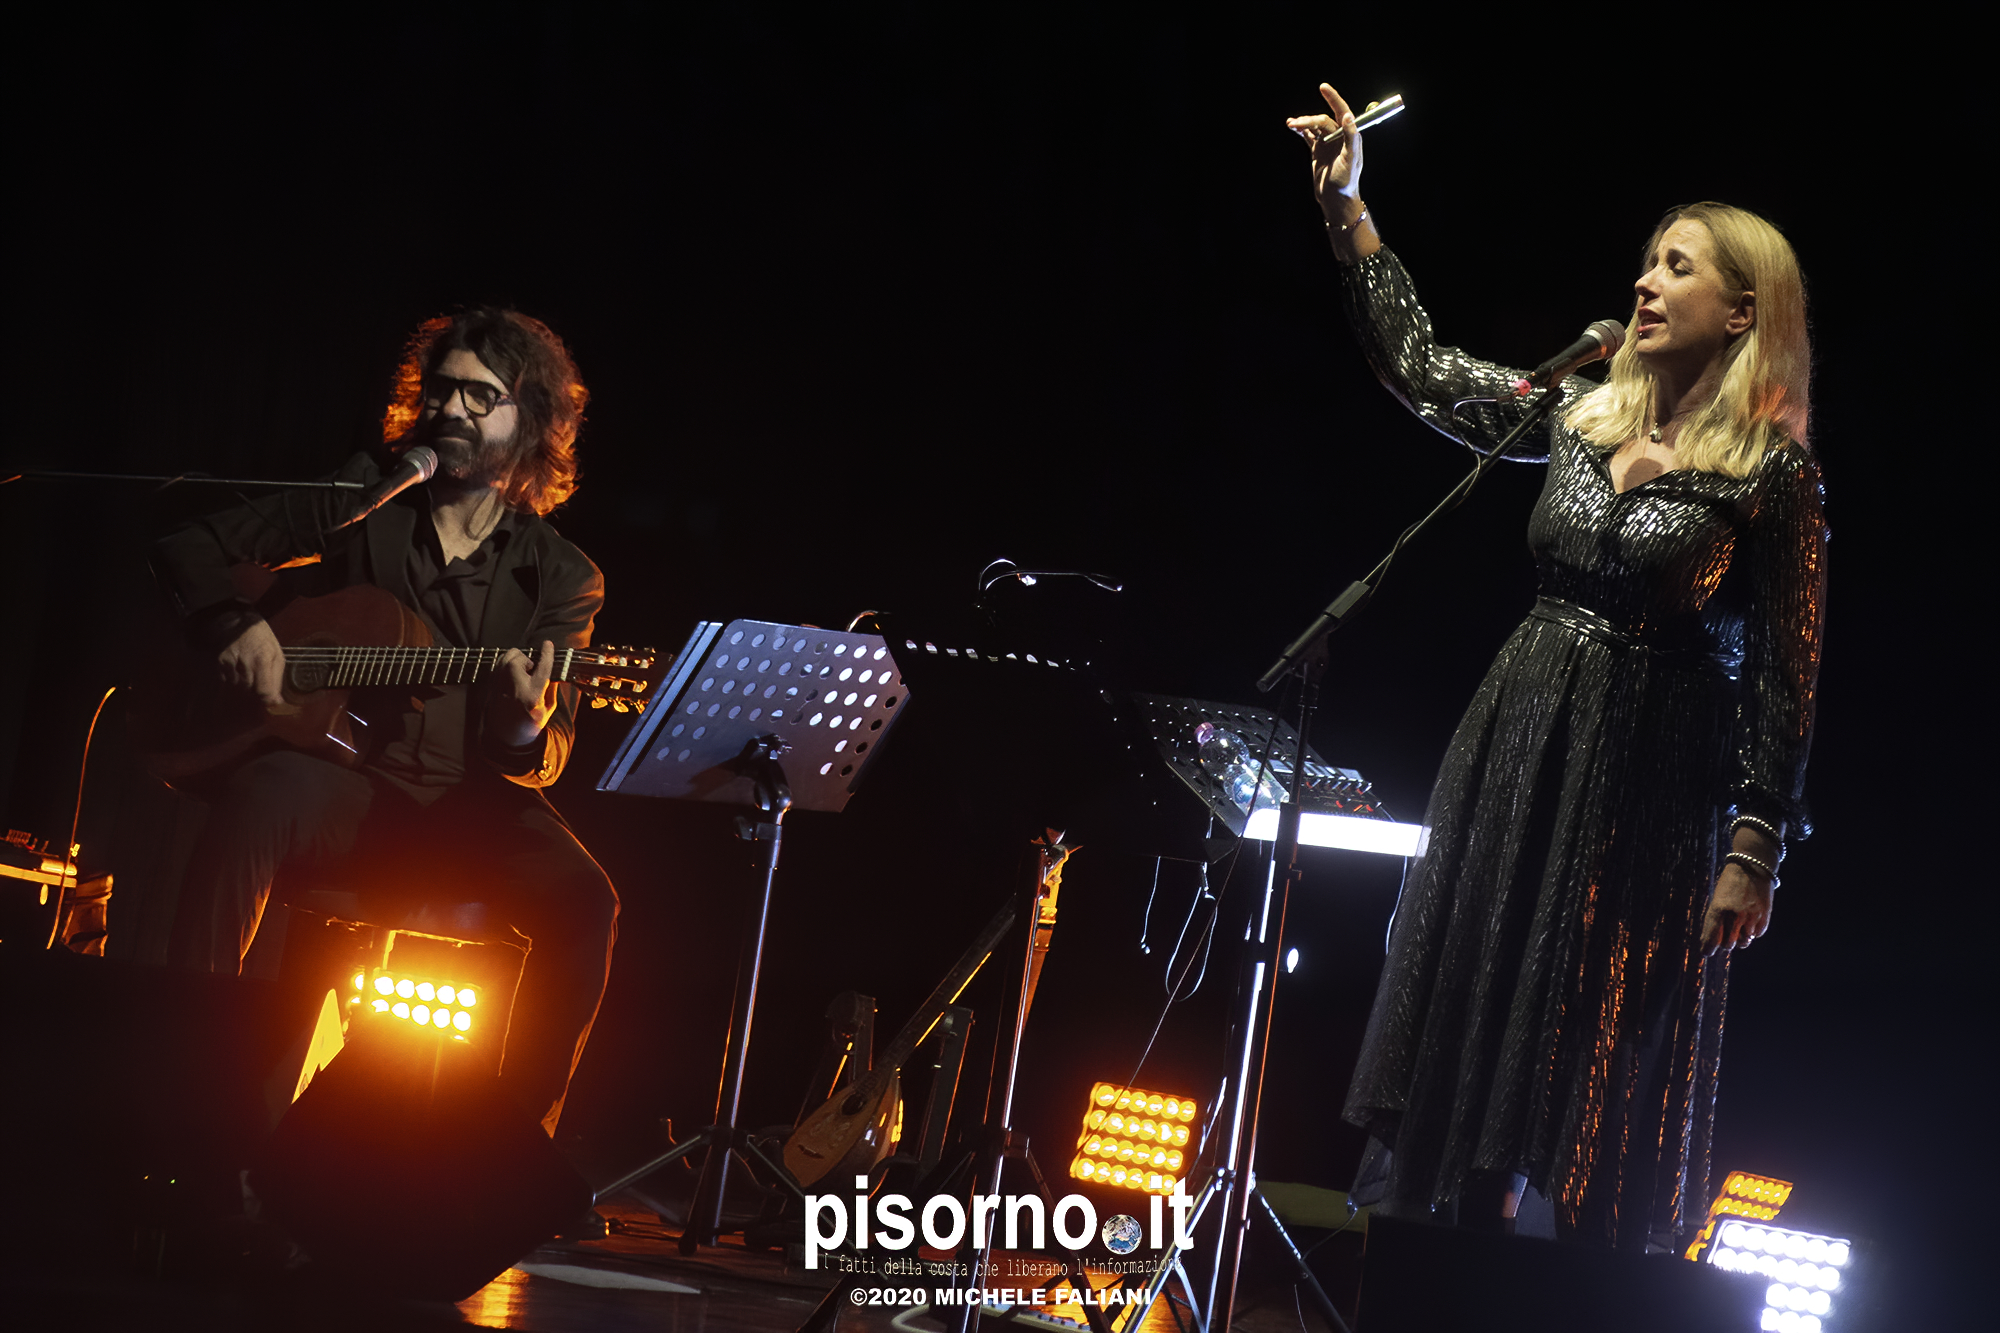 Ginevra Di Marco  Live @ Teatro Puccini, Firenze, 3 Ottobre 2020